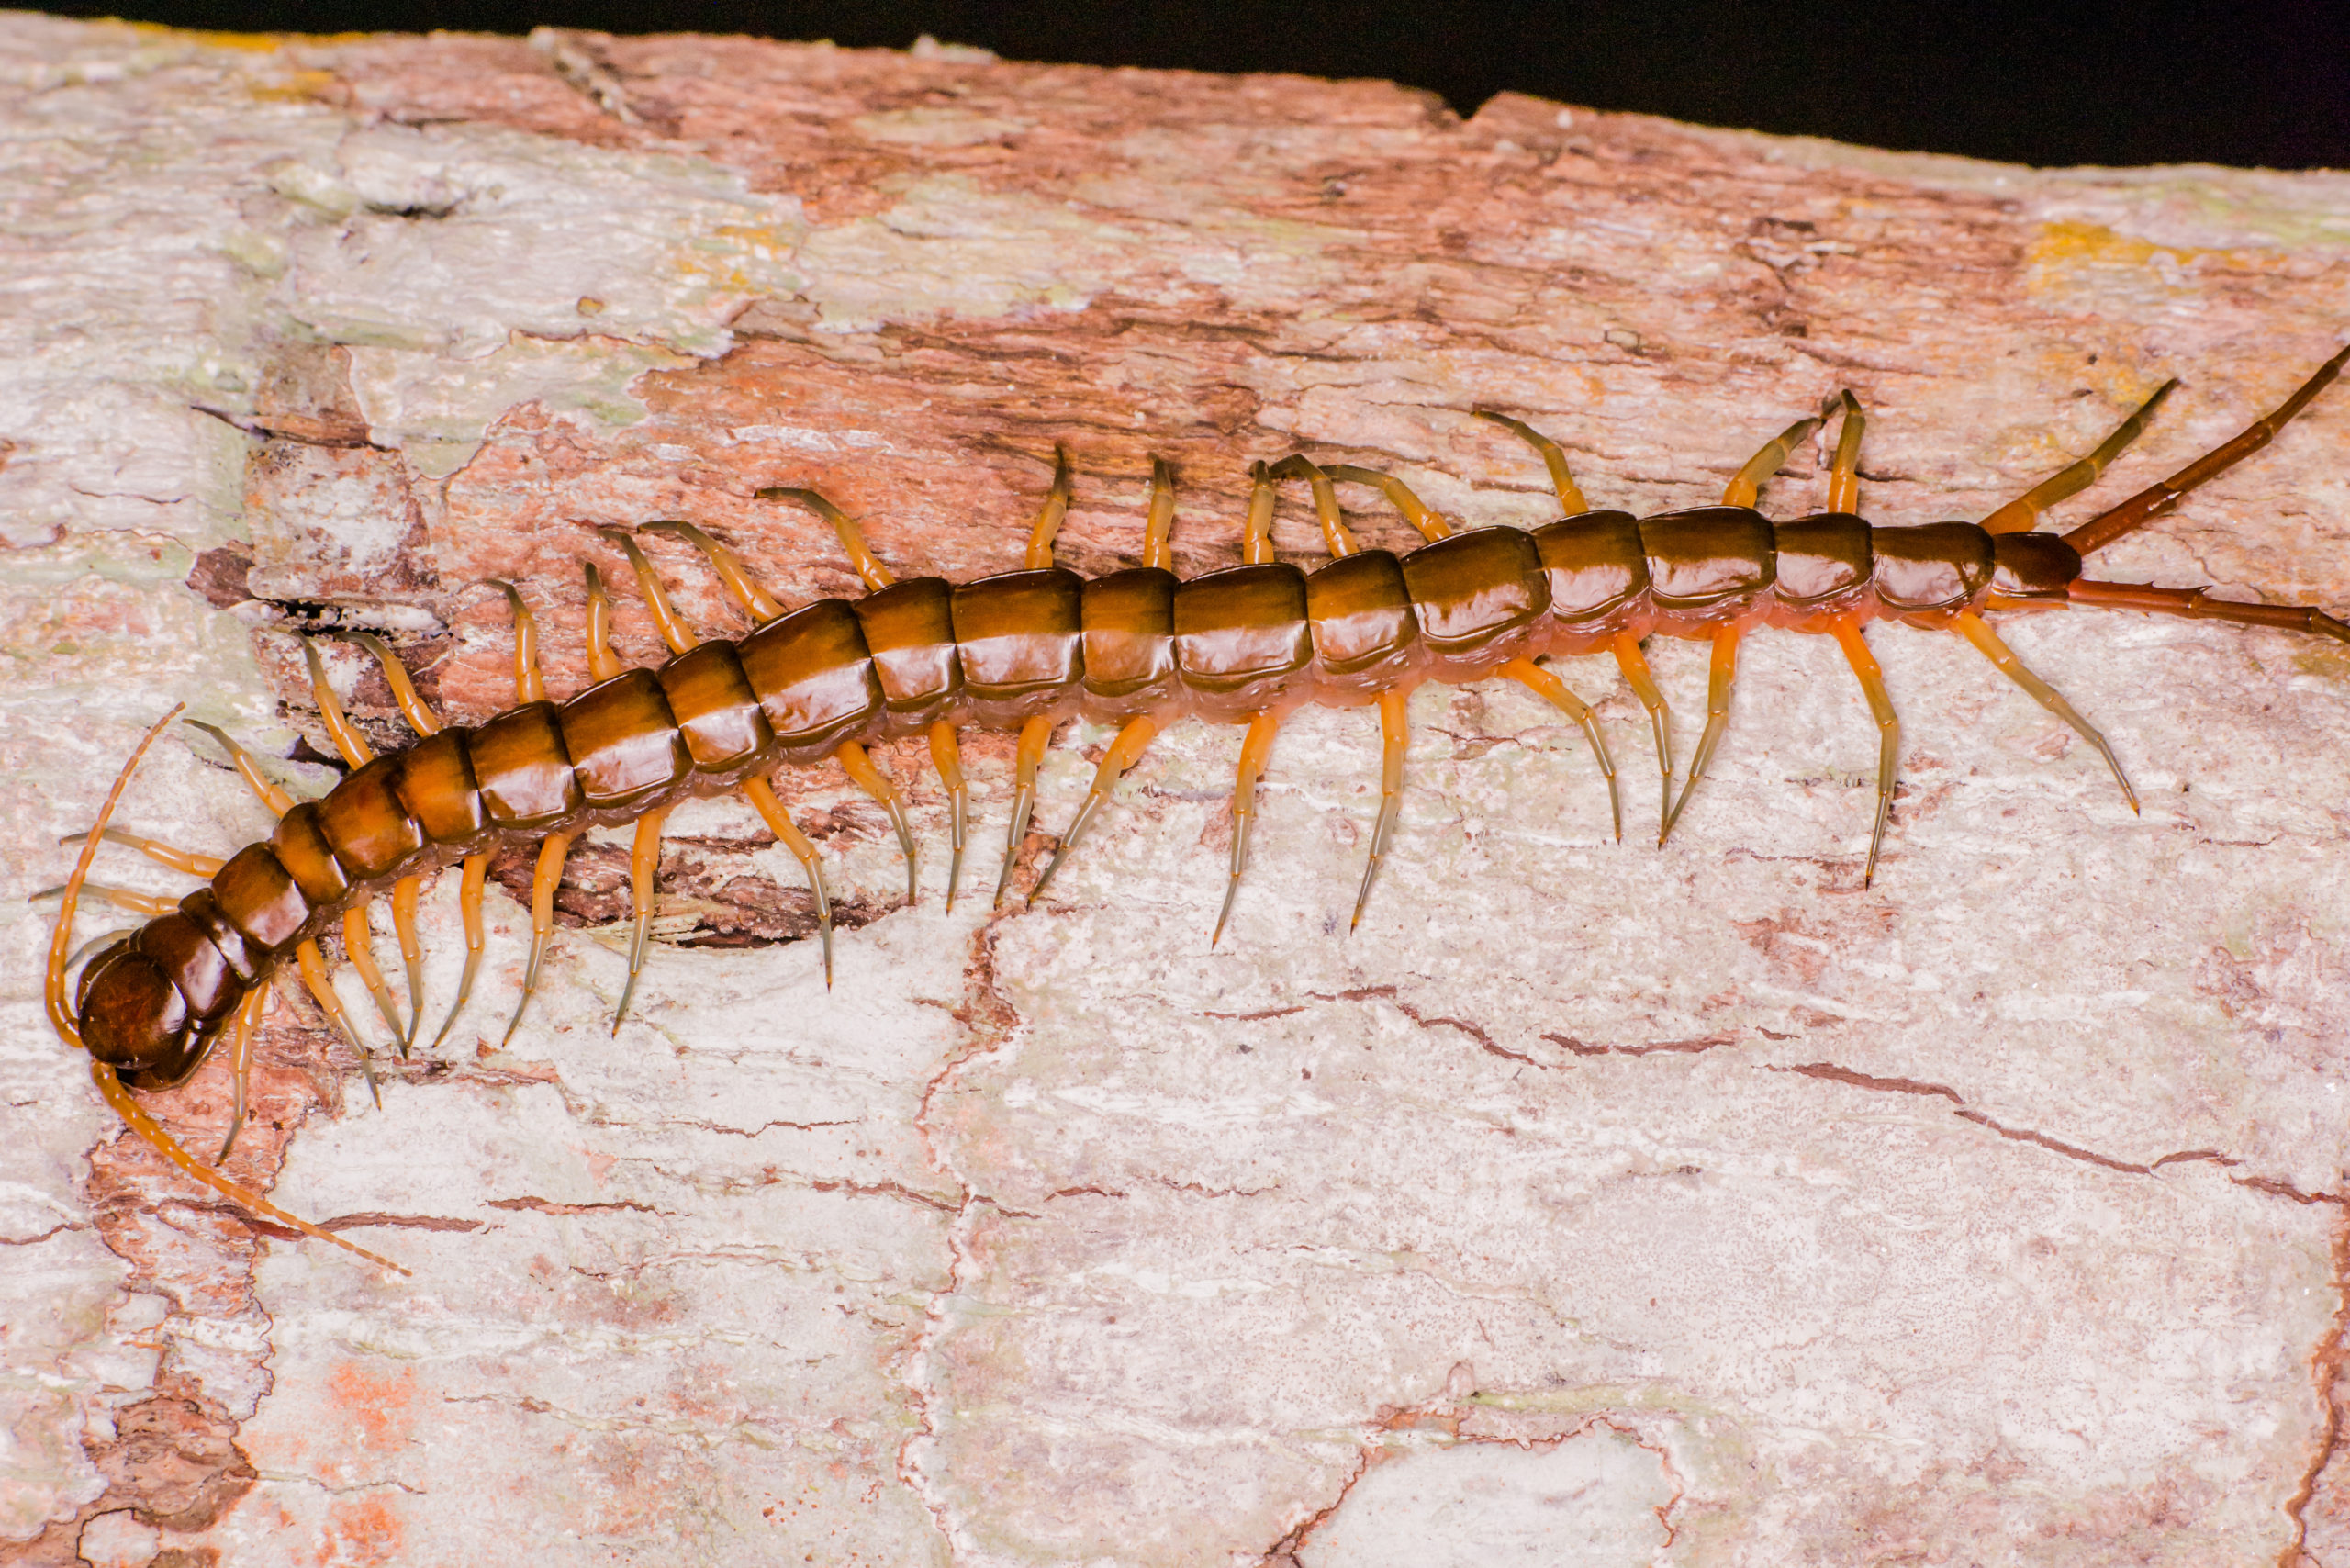 vietnamese giant centipede